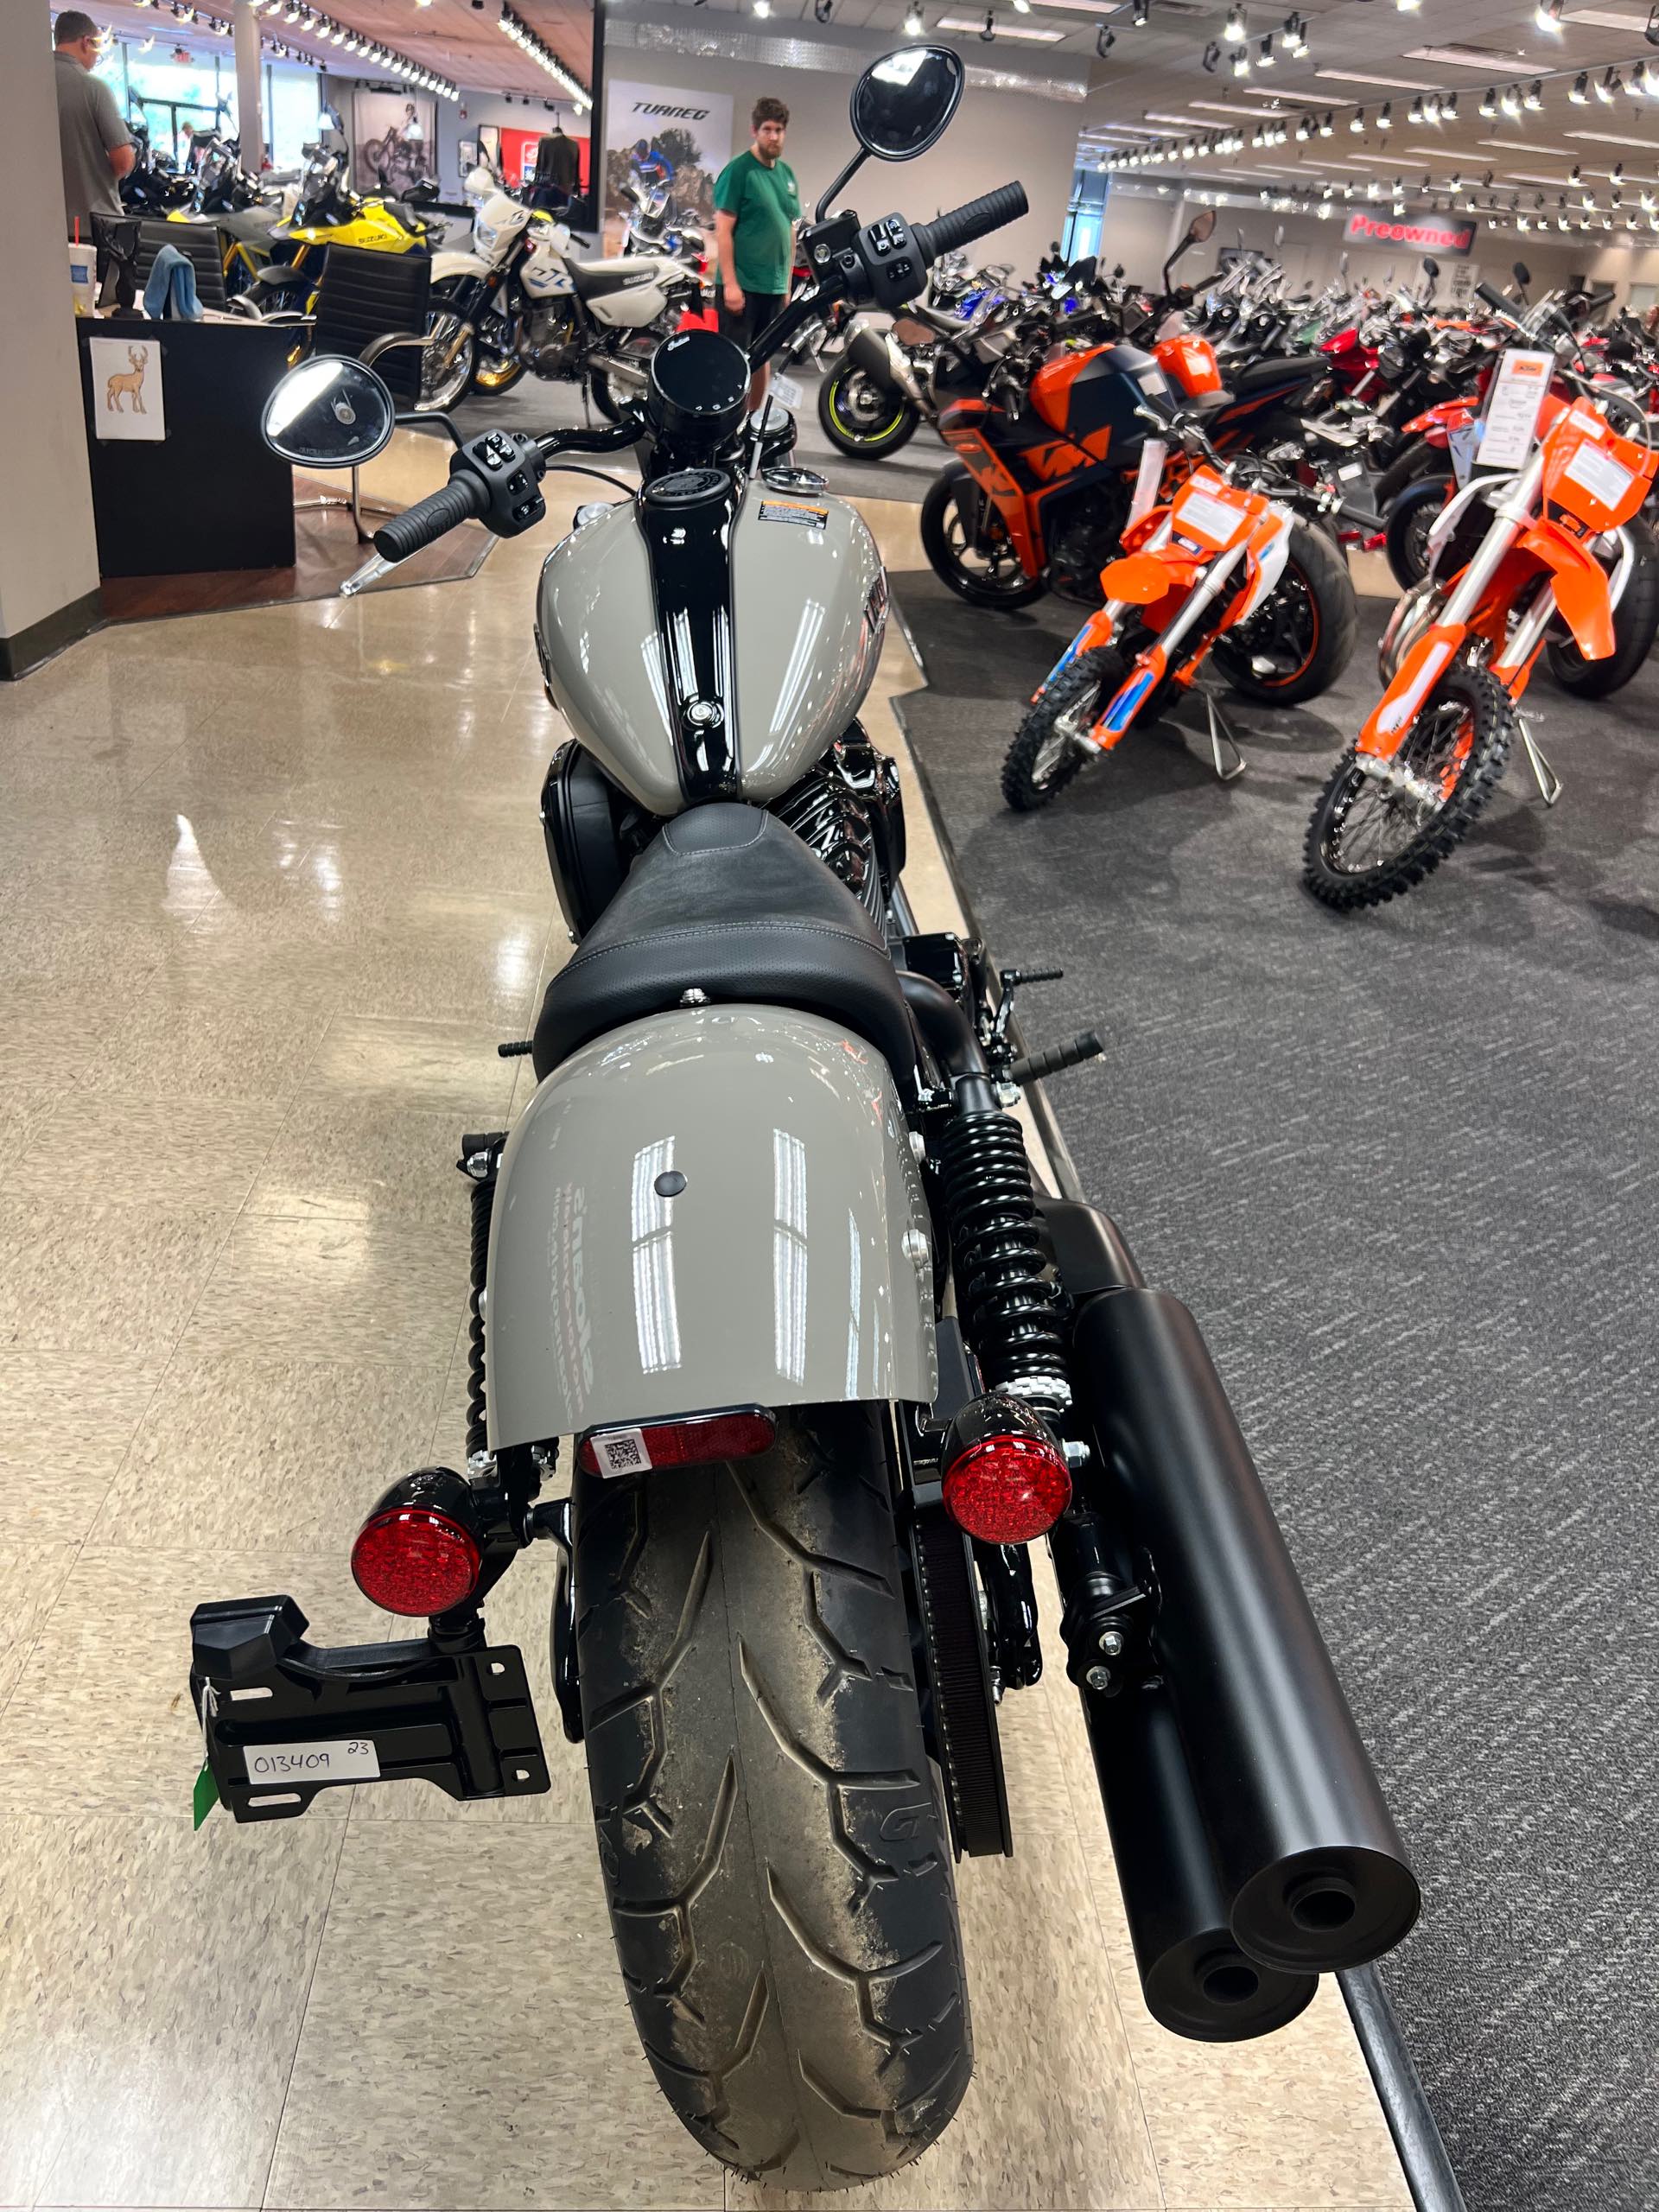 2023 Indian Motorcycle Chief Dark Horse at Sloans Motorcycle ATV, Murfreesboro, TN, 37129